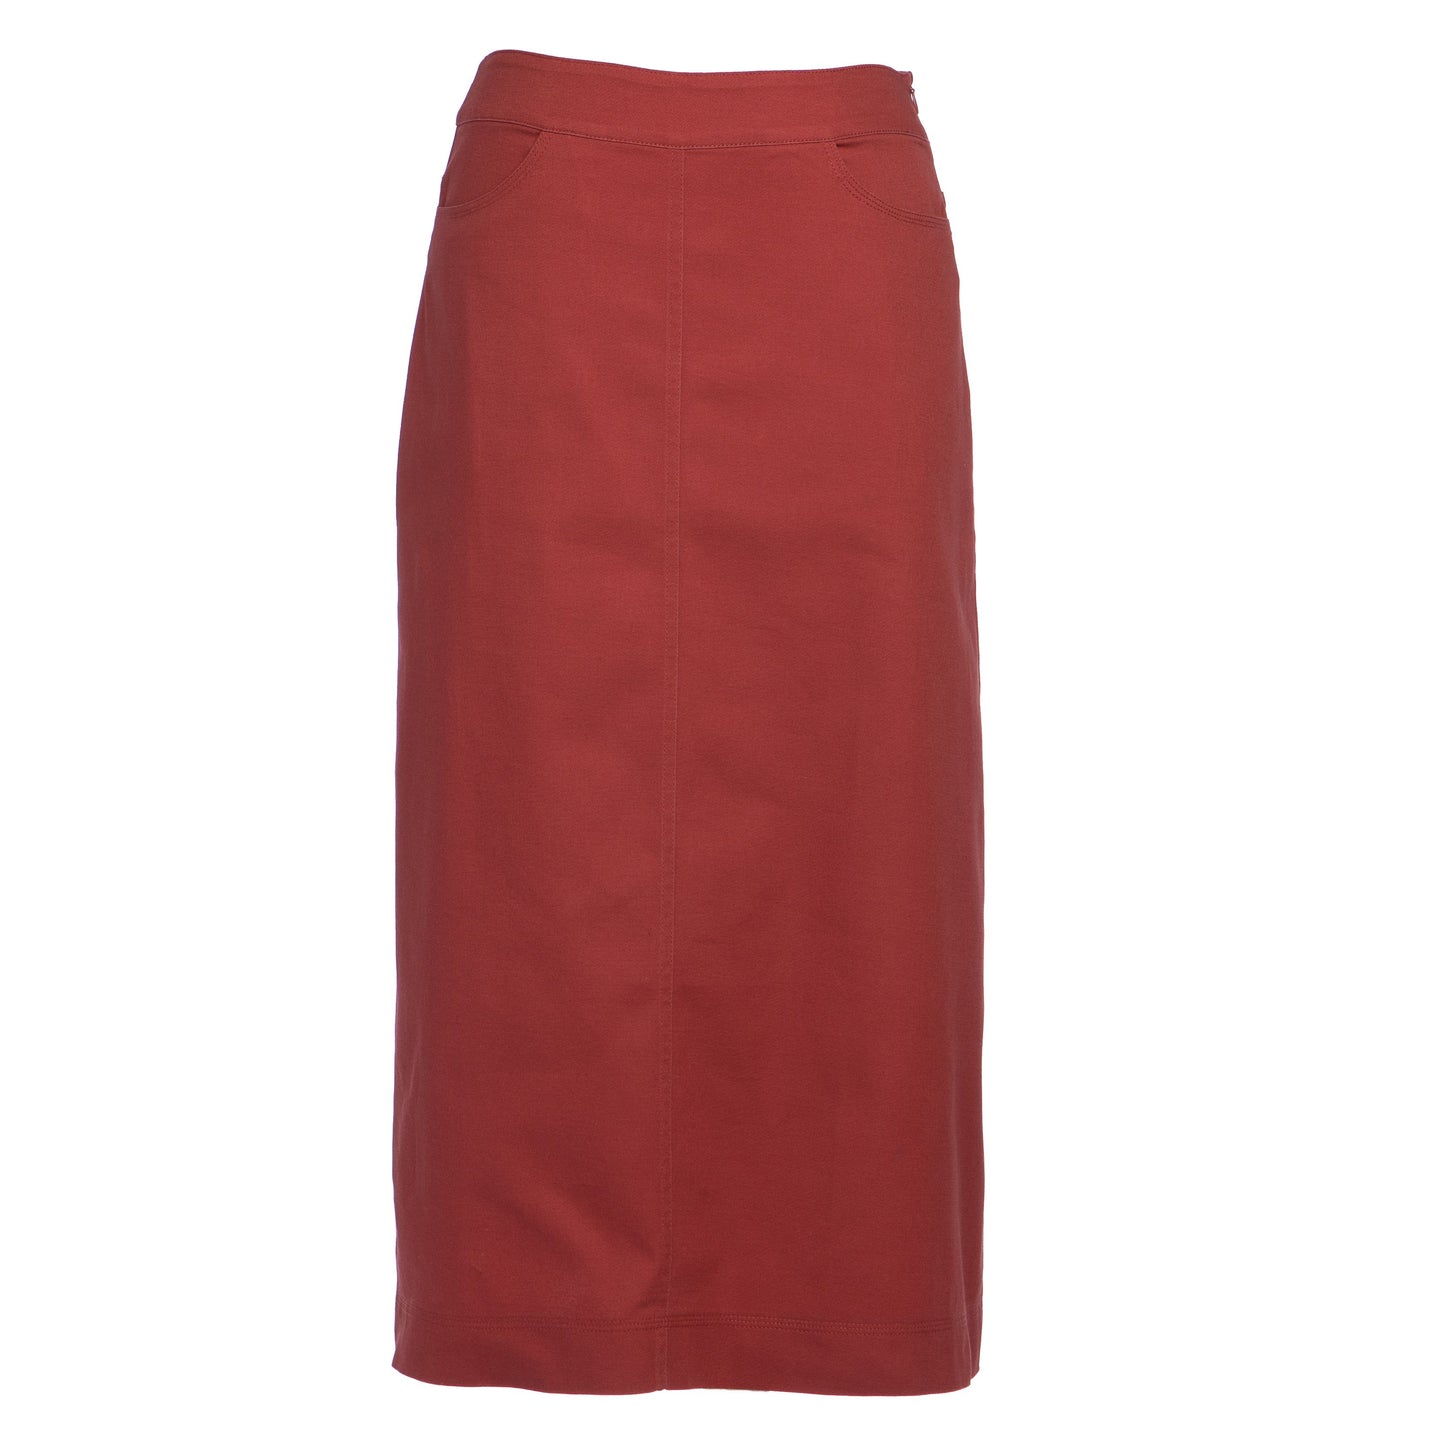 nC Classic Sedona Red Brown Skirt